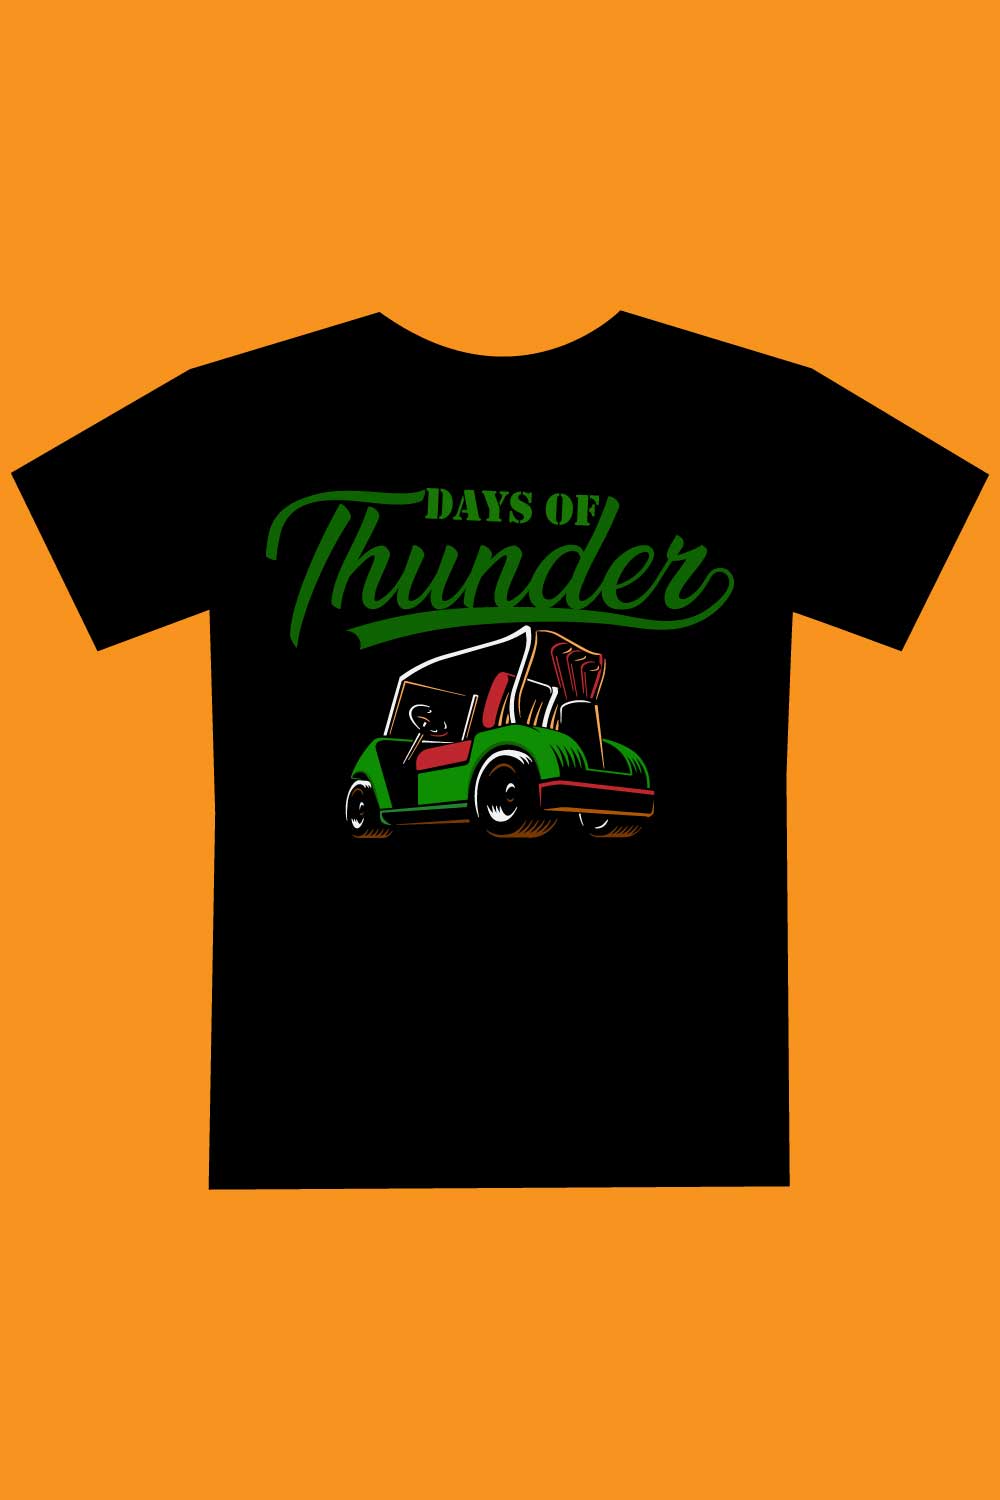 Days of Thunder T shirt design pinterest preview image.